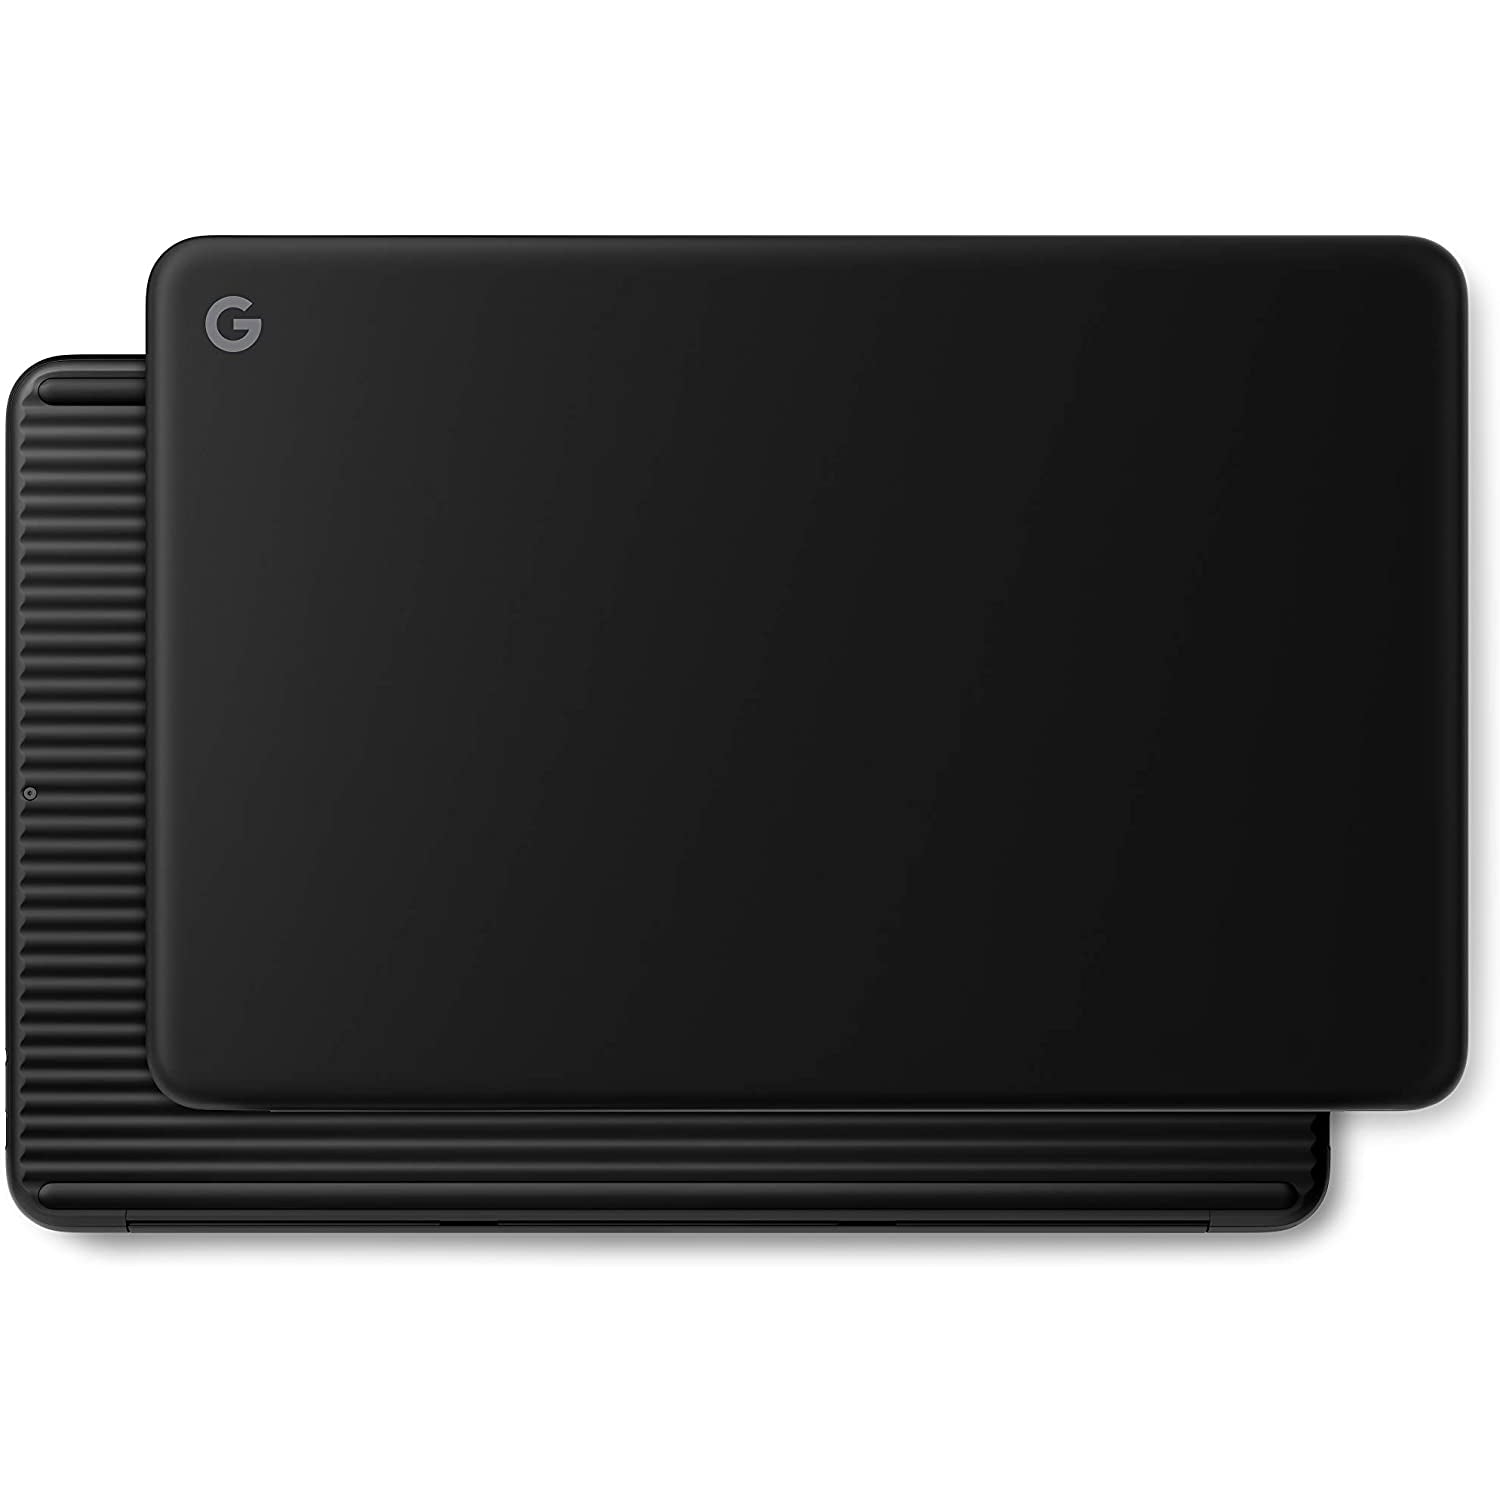 Google Pixelbook Go Intel Core i5-8200Y 8GB RAM 128GB SSD - Just Black - Refurbished Excellent